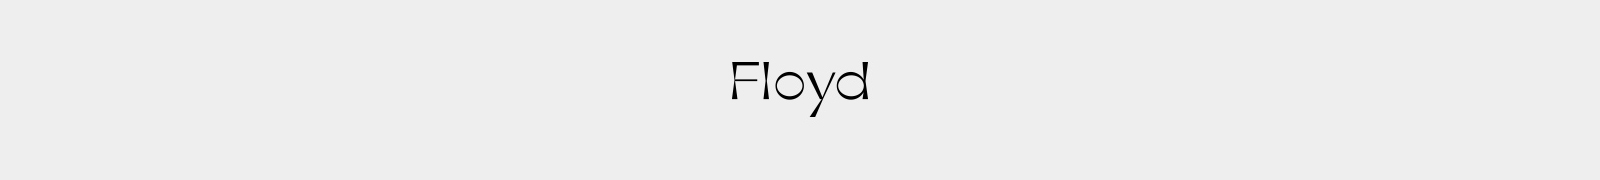 Floyd header image